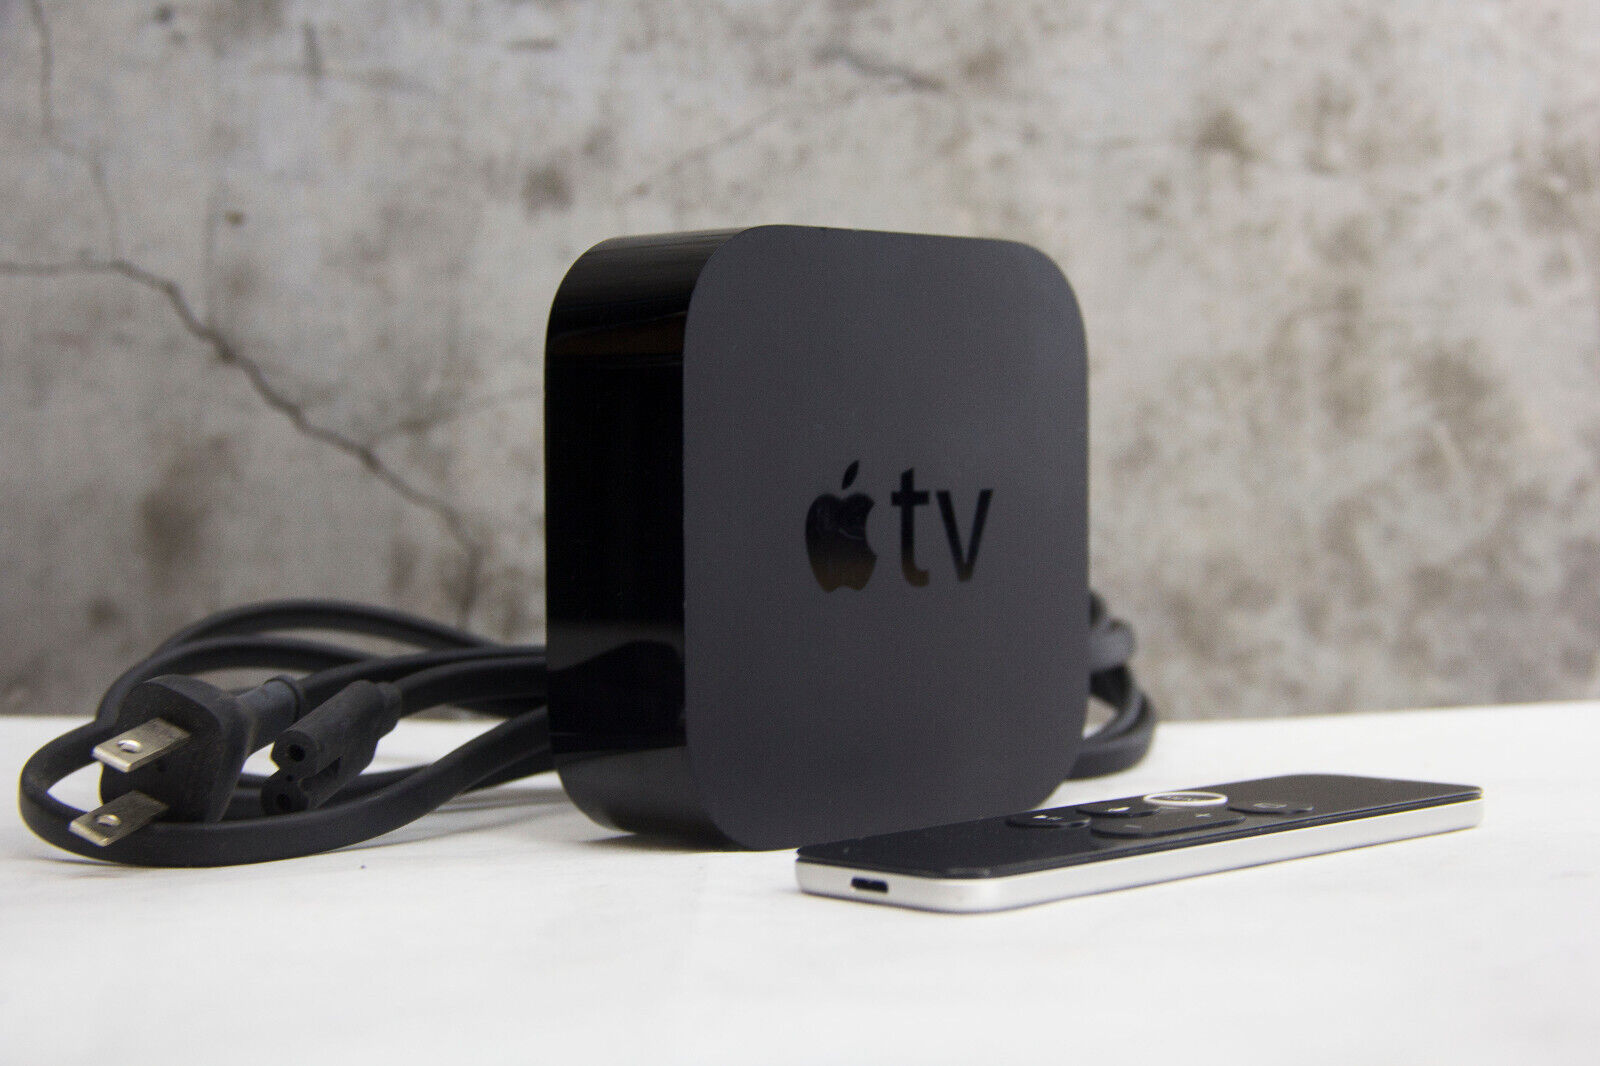 Apple TV (4th Generation, Siri) 1080p, 32GB